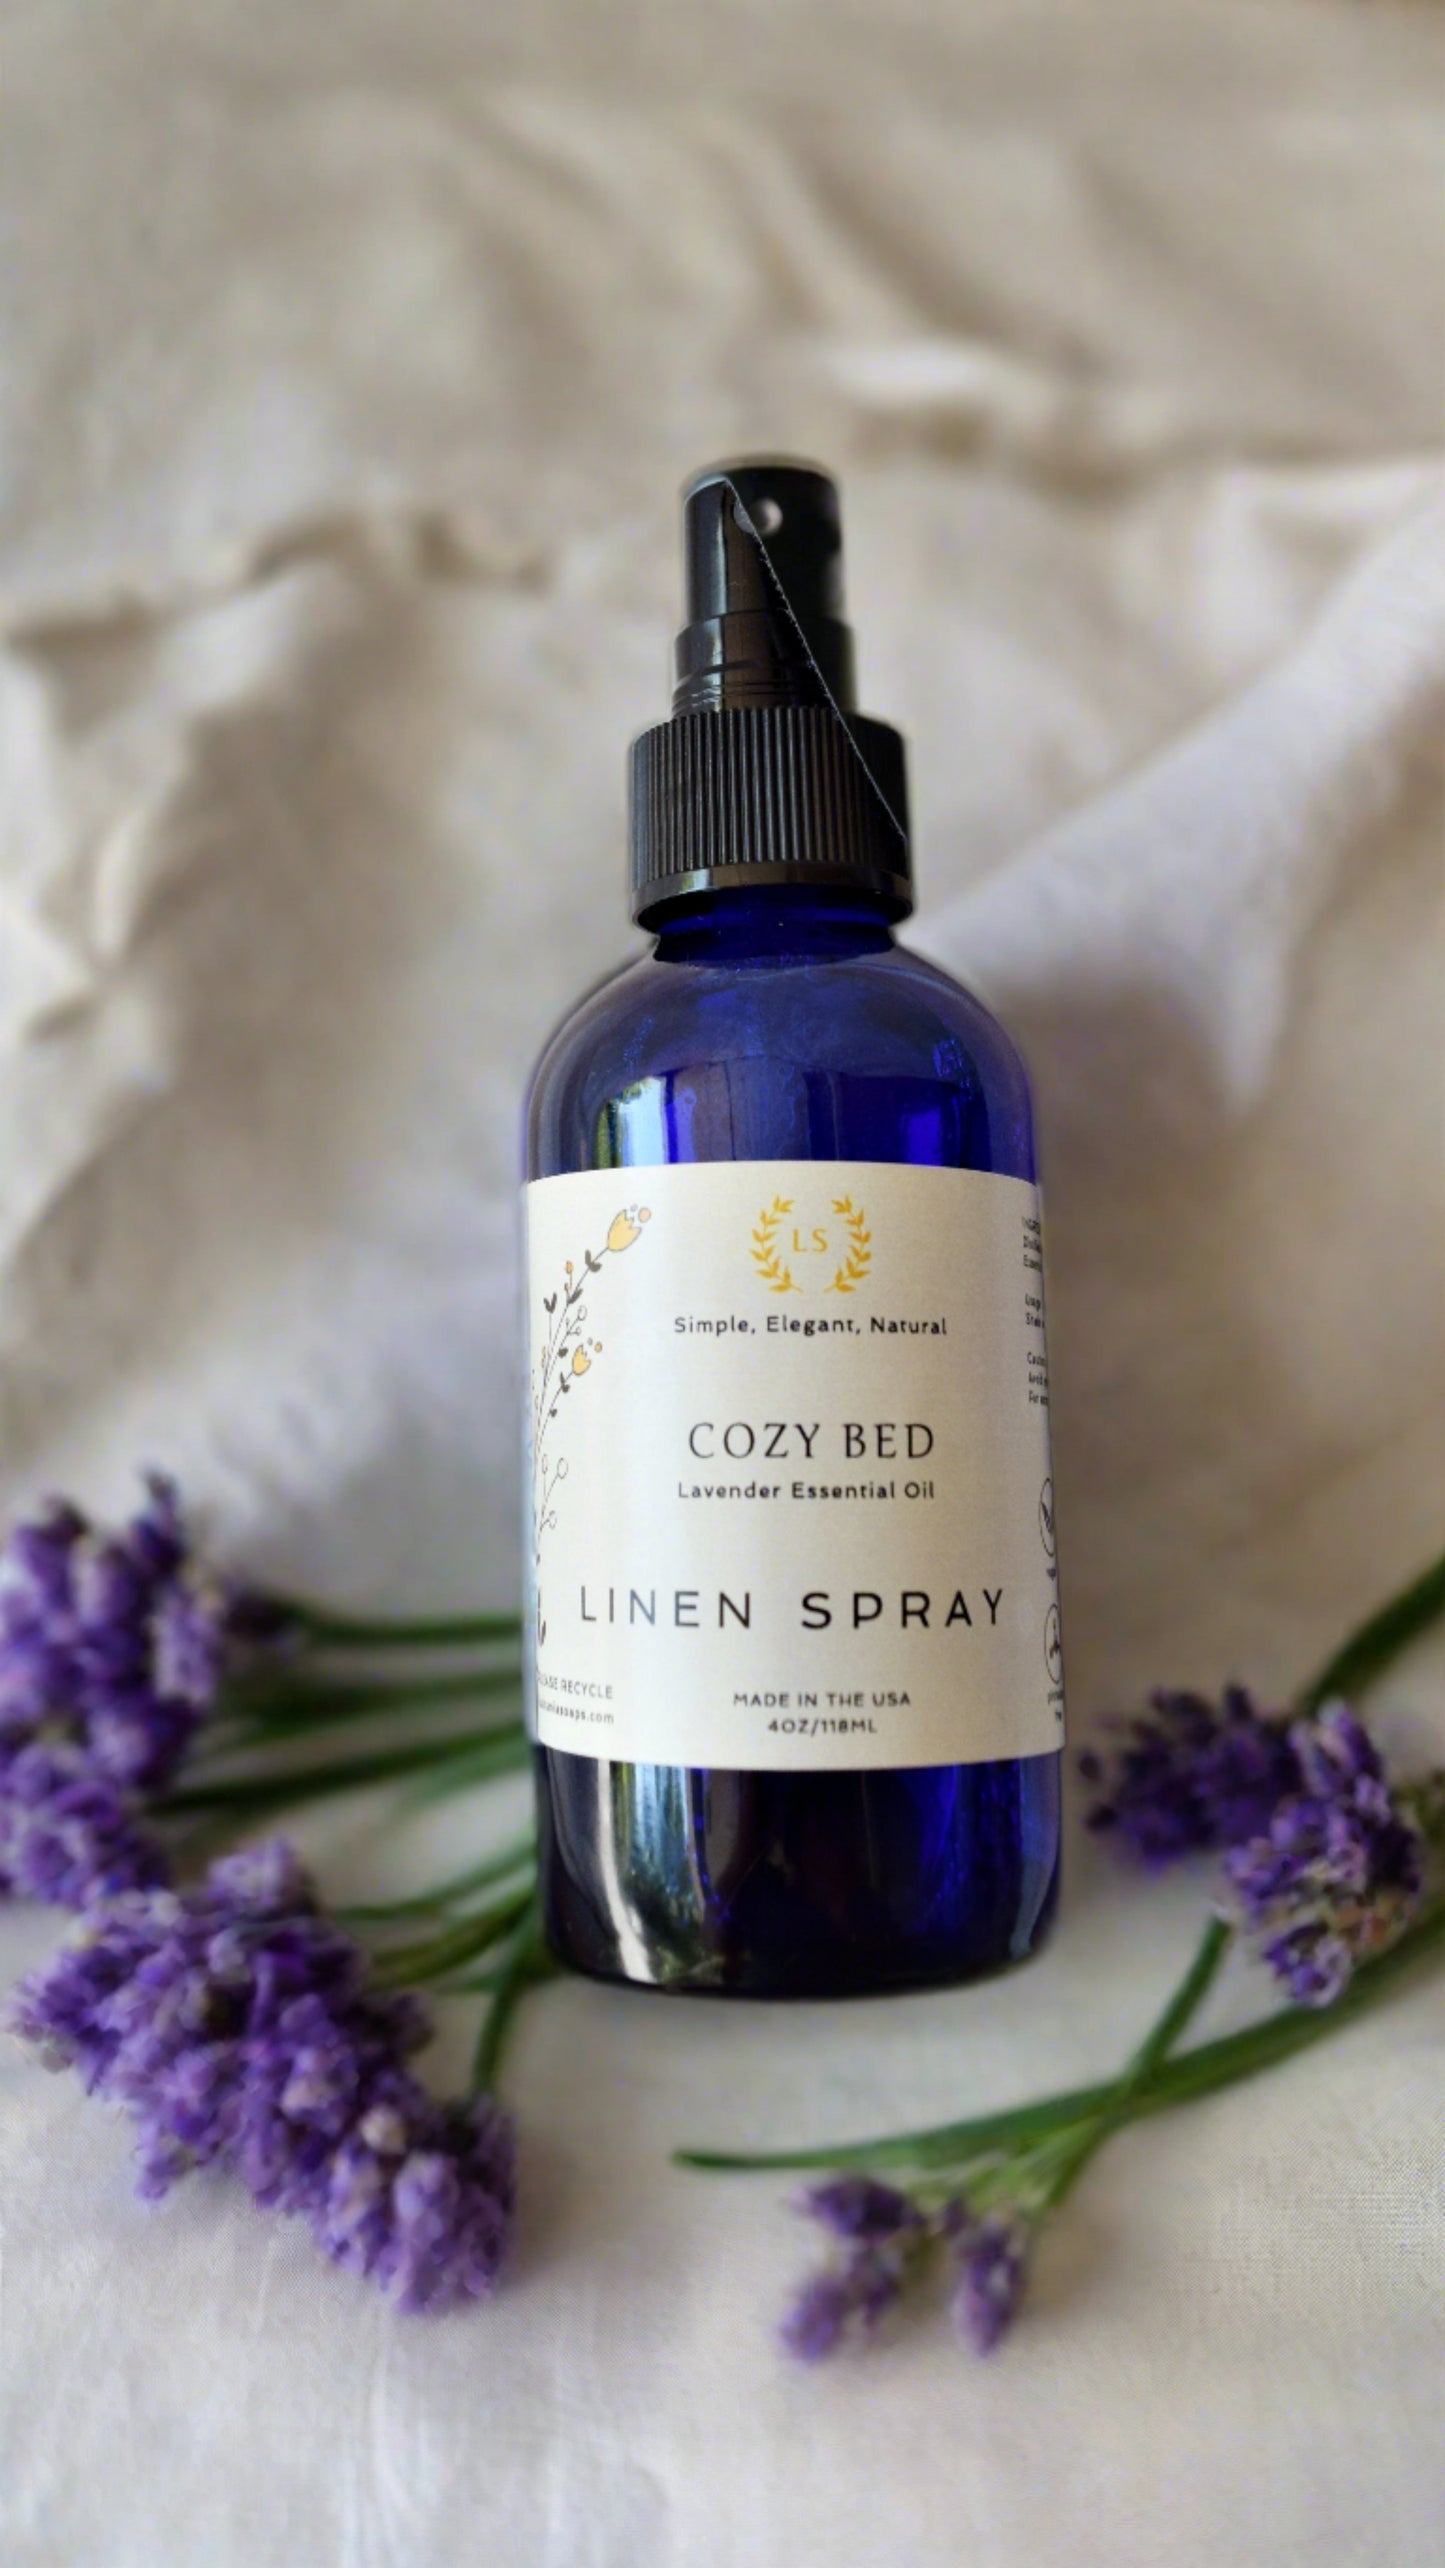 Linen Spray - Sweet Romance - Blend of Lavender, Bergamot, Patchouli & –  LusitaniaSoaps